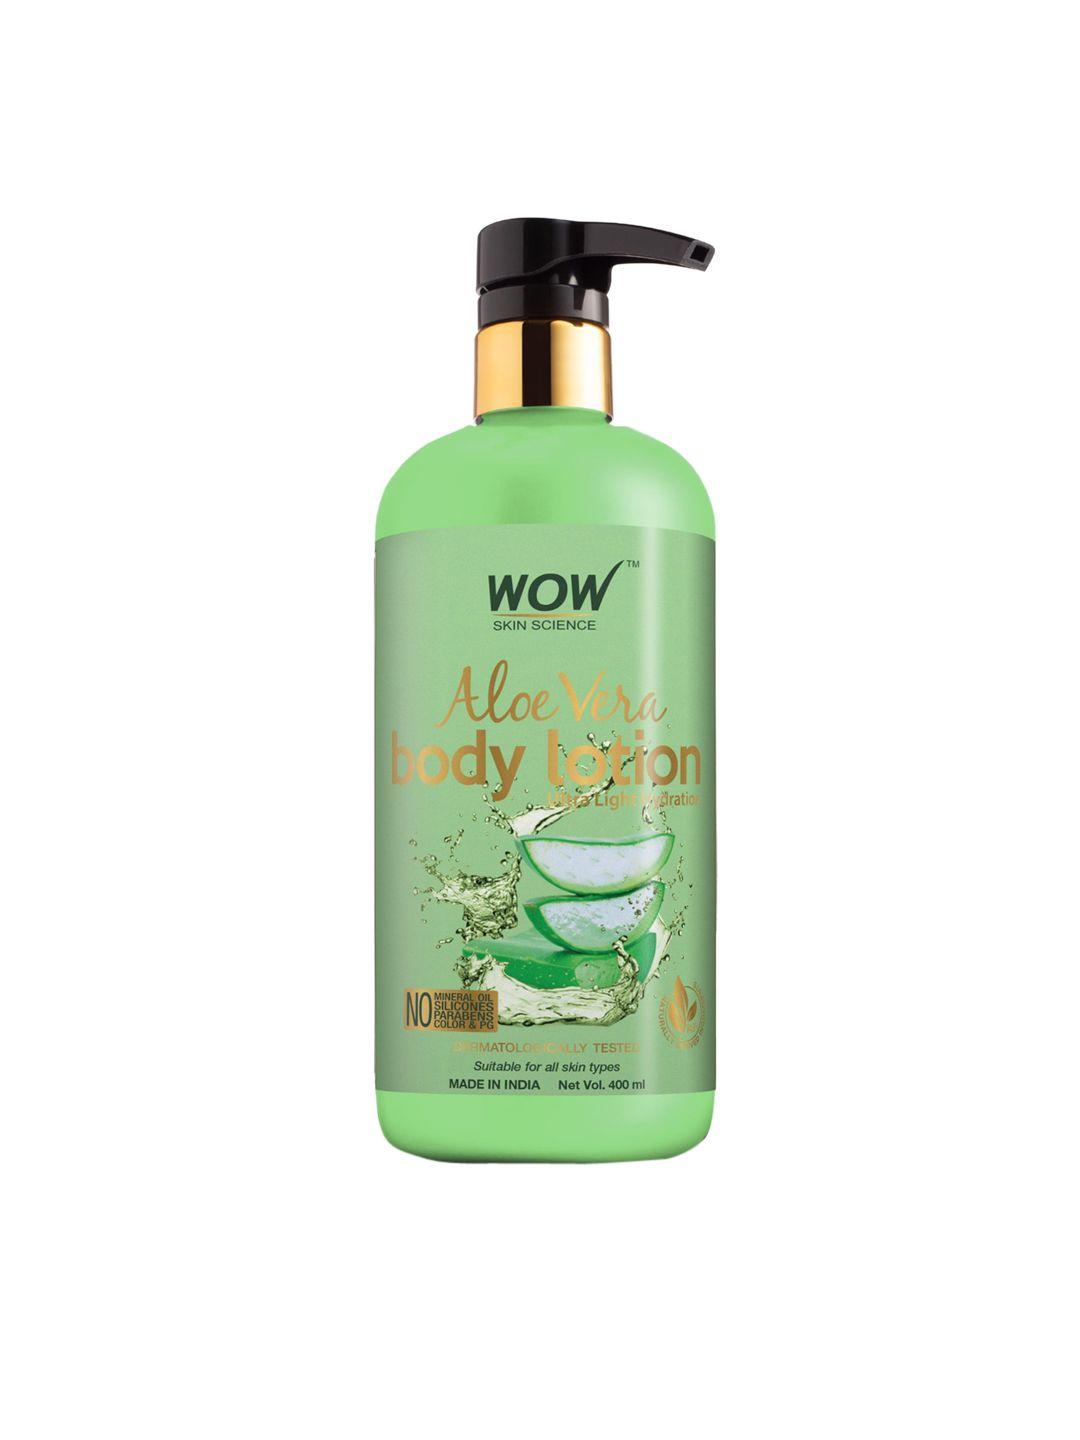 wow skin science aloe vera body lotion - ultra light hydration - 400 ml